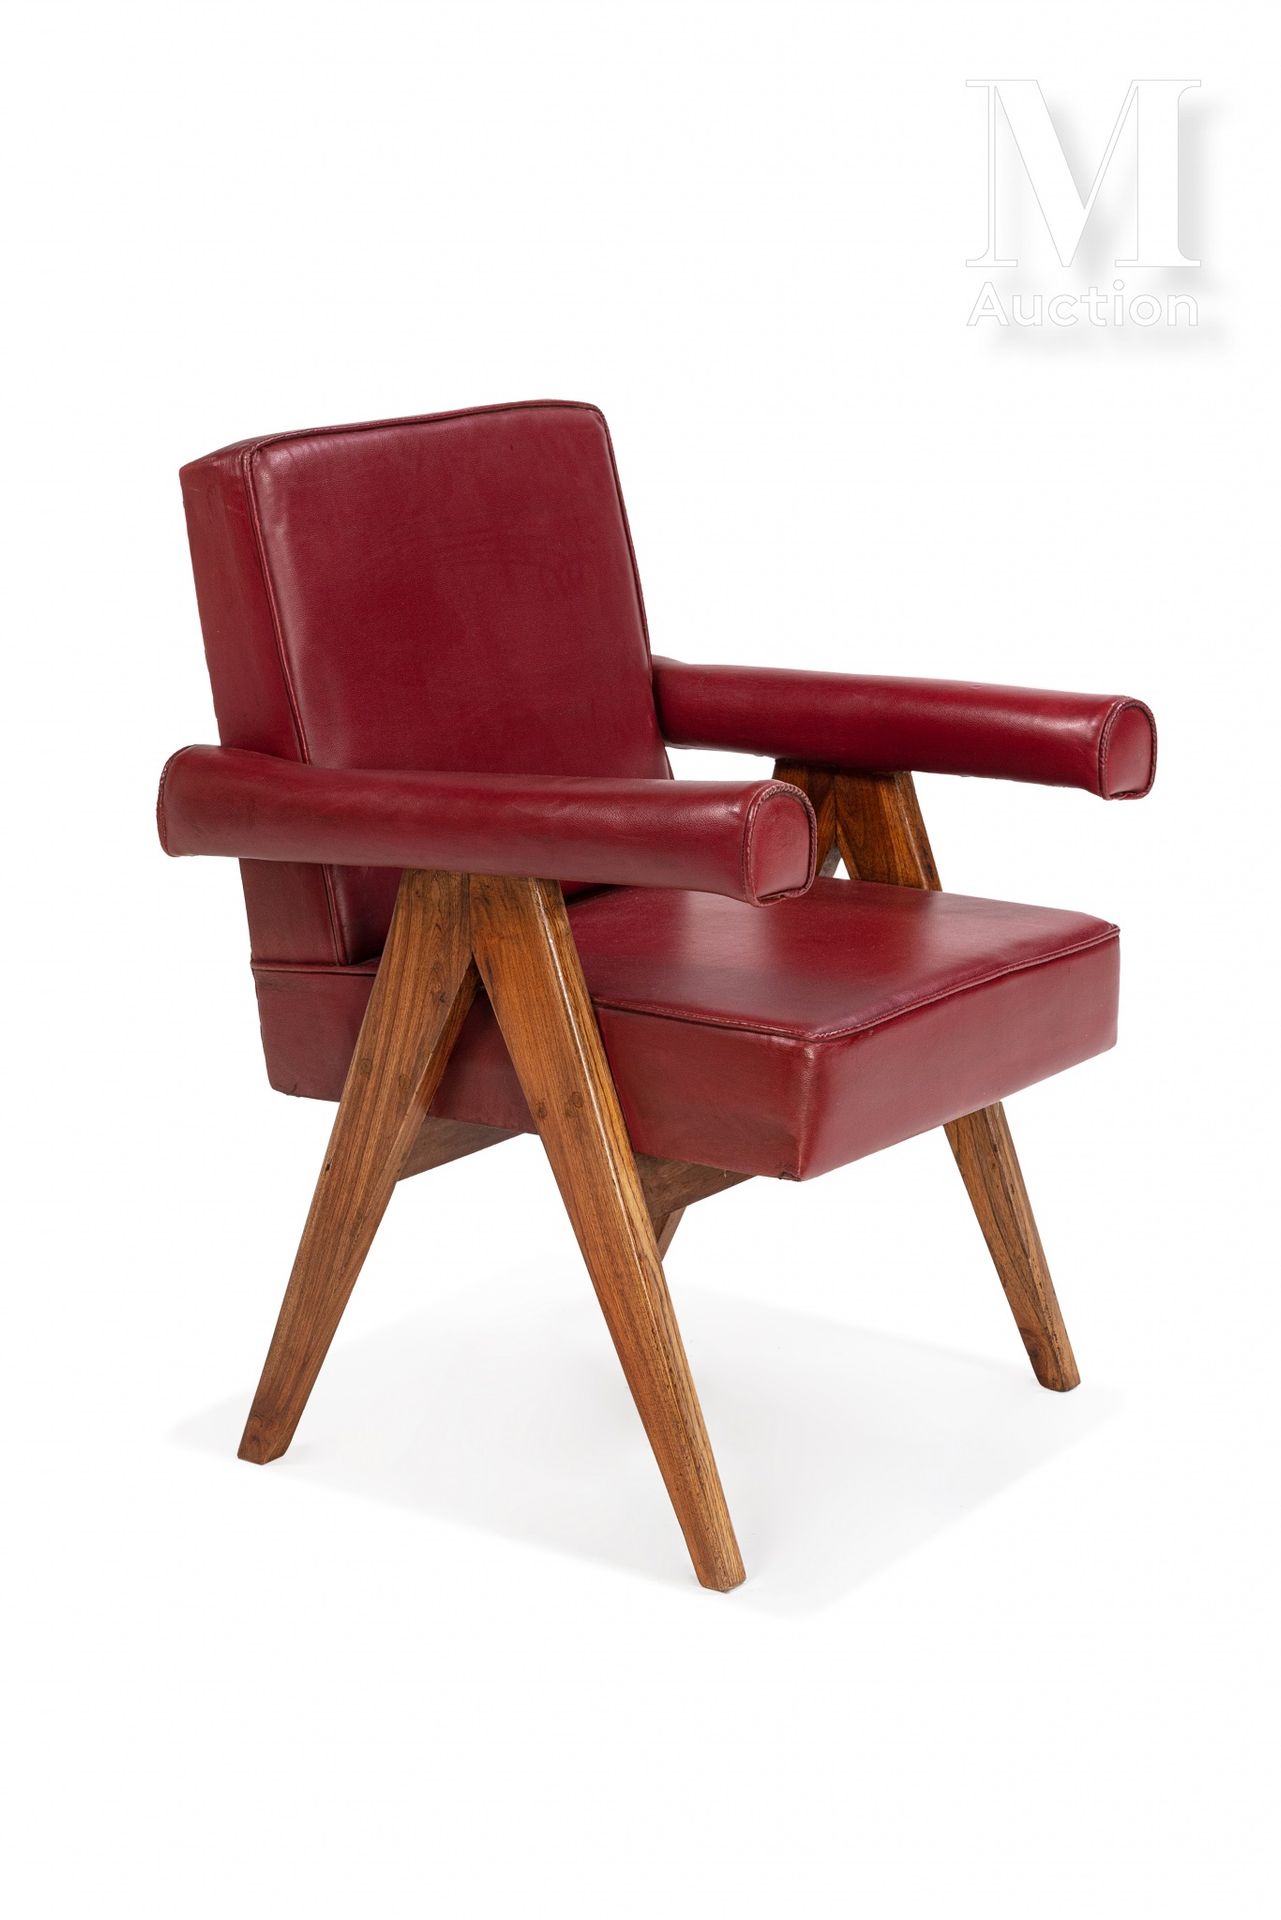 PIERRE JEANNERET (1896 - 1967) "委员会主席

1953-54

实心柚木和红色皮革扶手椅。

背面栏杆上标有 "P.G.I - &hellip;